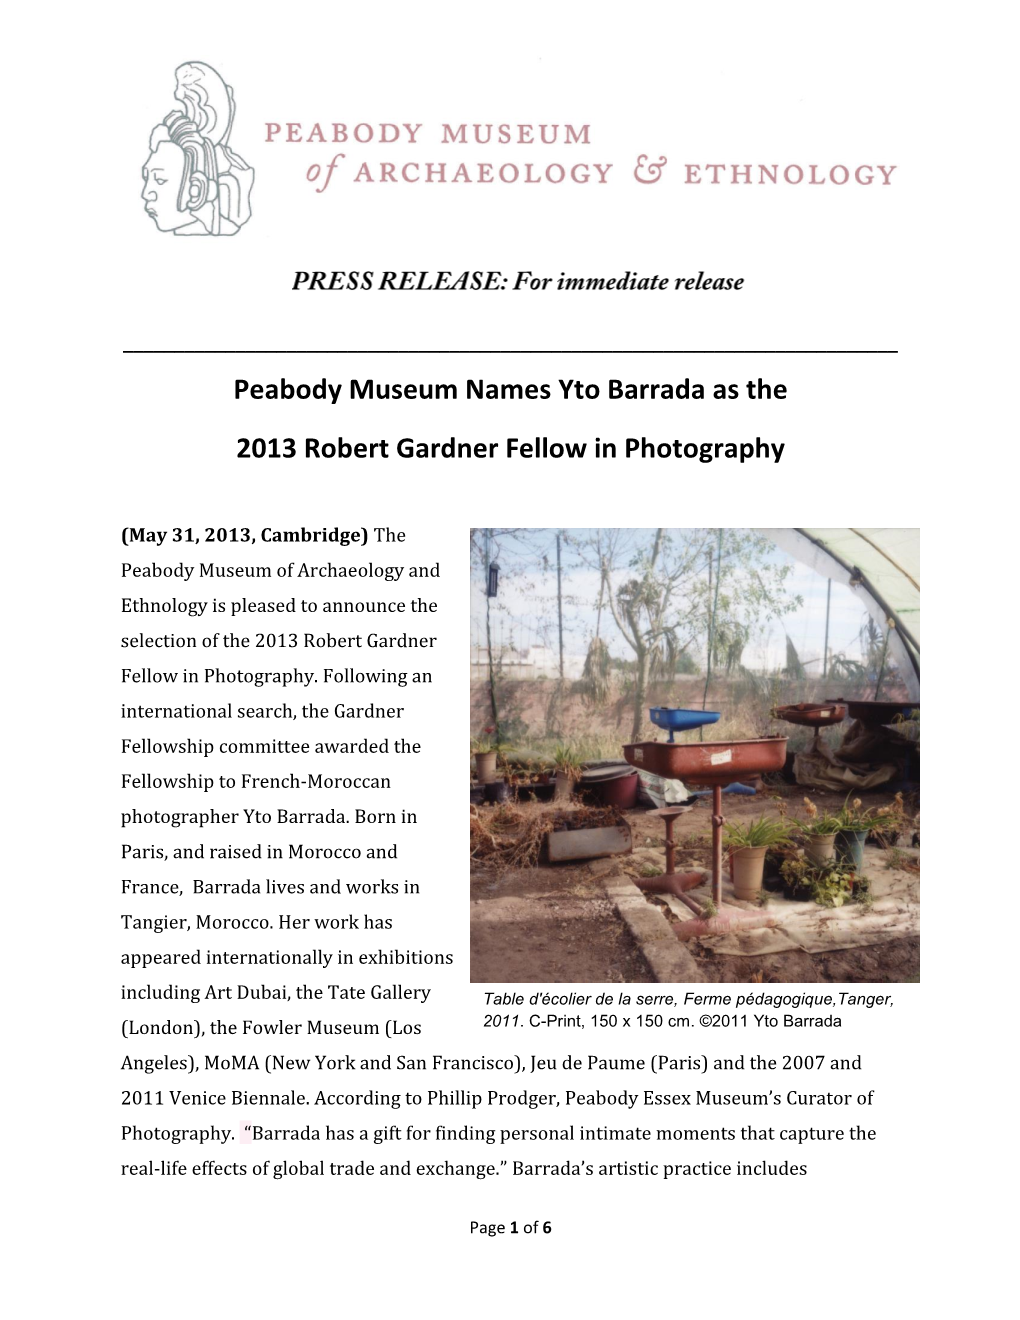 Peabody Museum Names Yto Barrada As the 2013 Robert Gardner Fellow in Photography